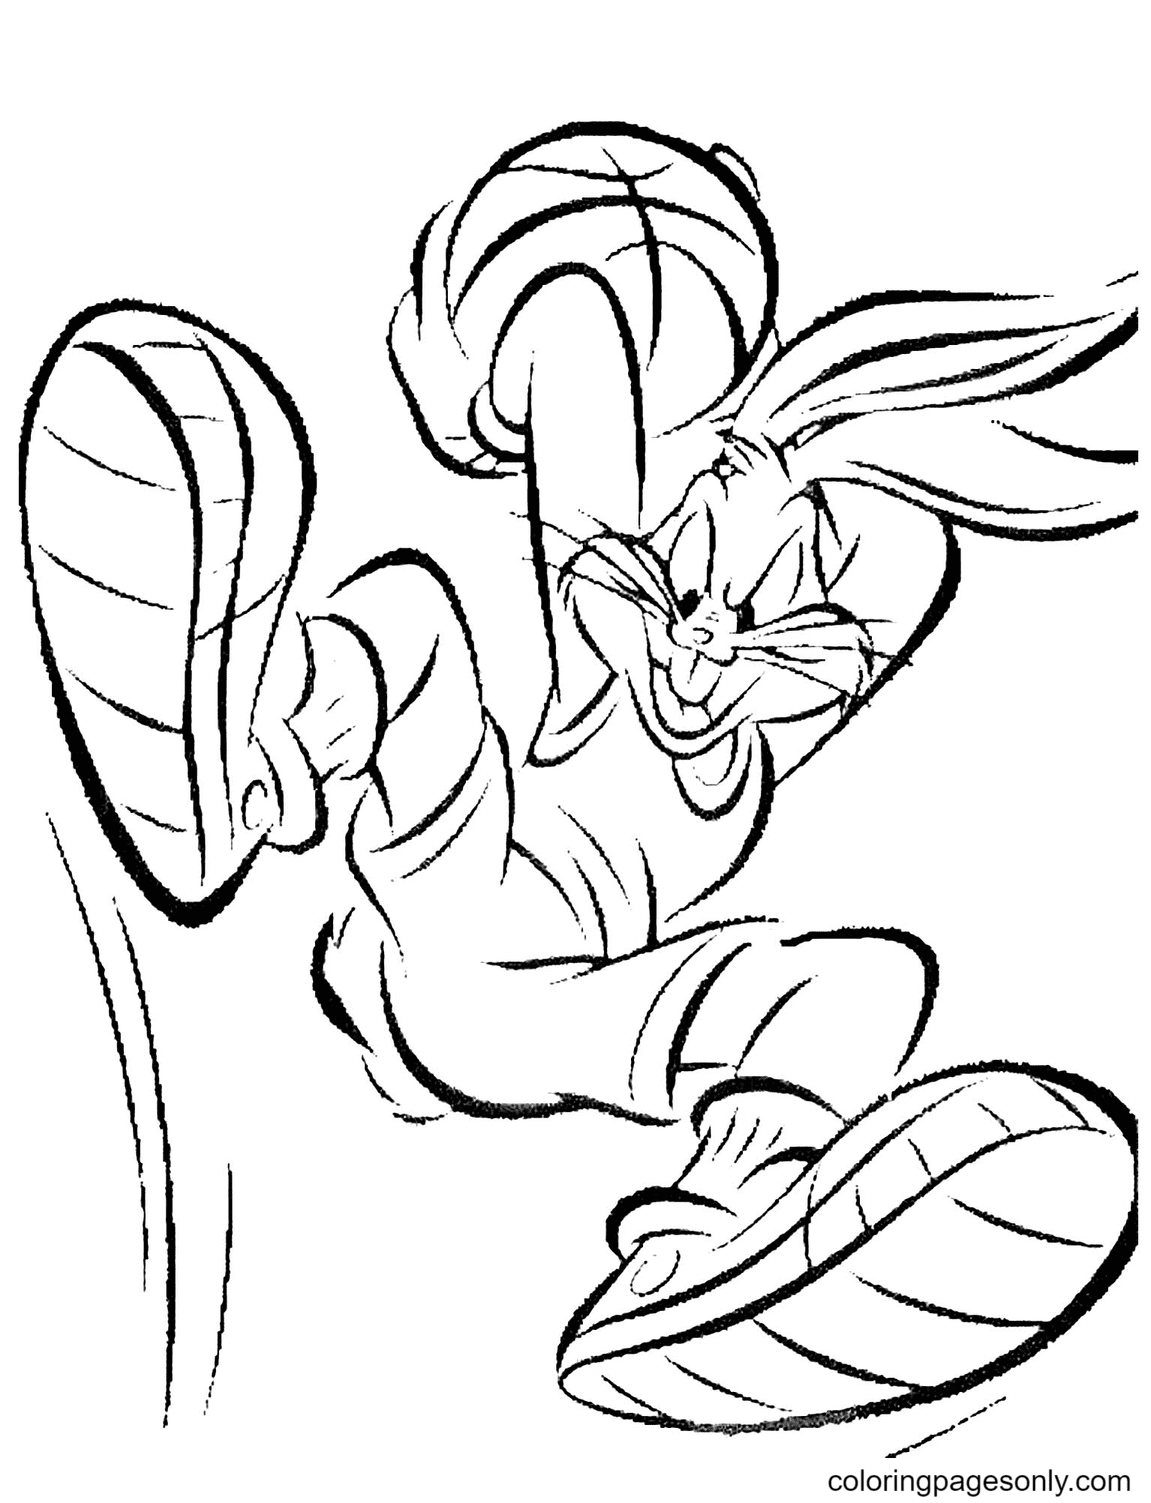 Bugs Bunny Playing Basketball Coloring Page